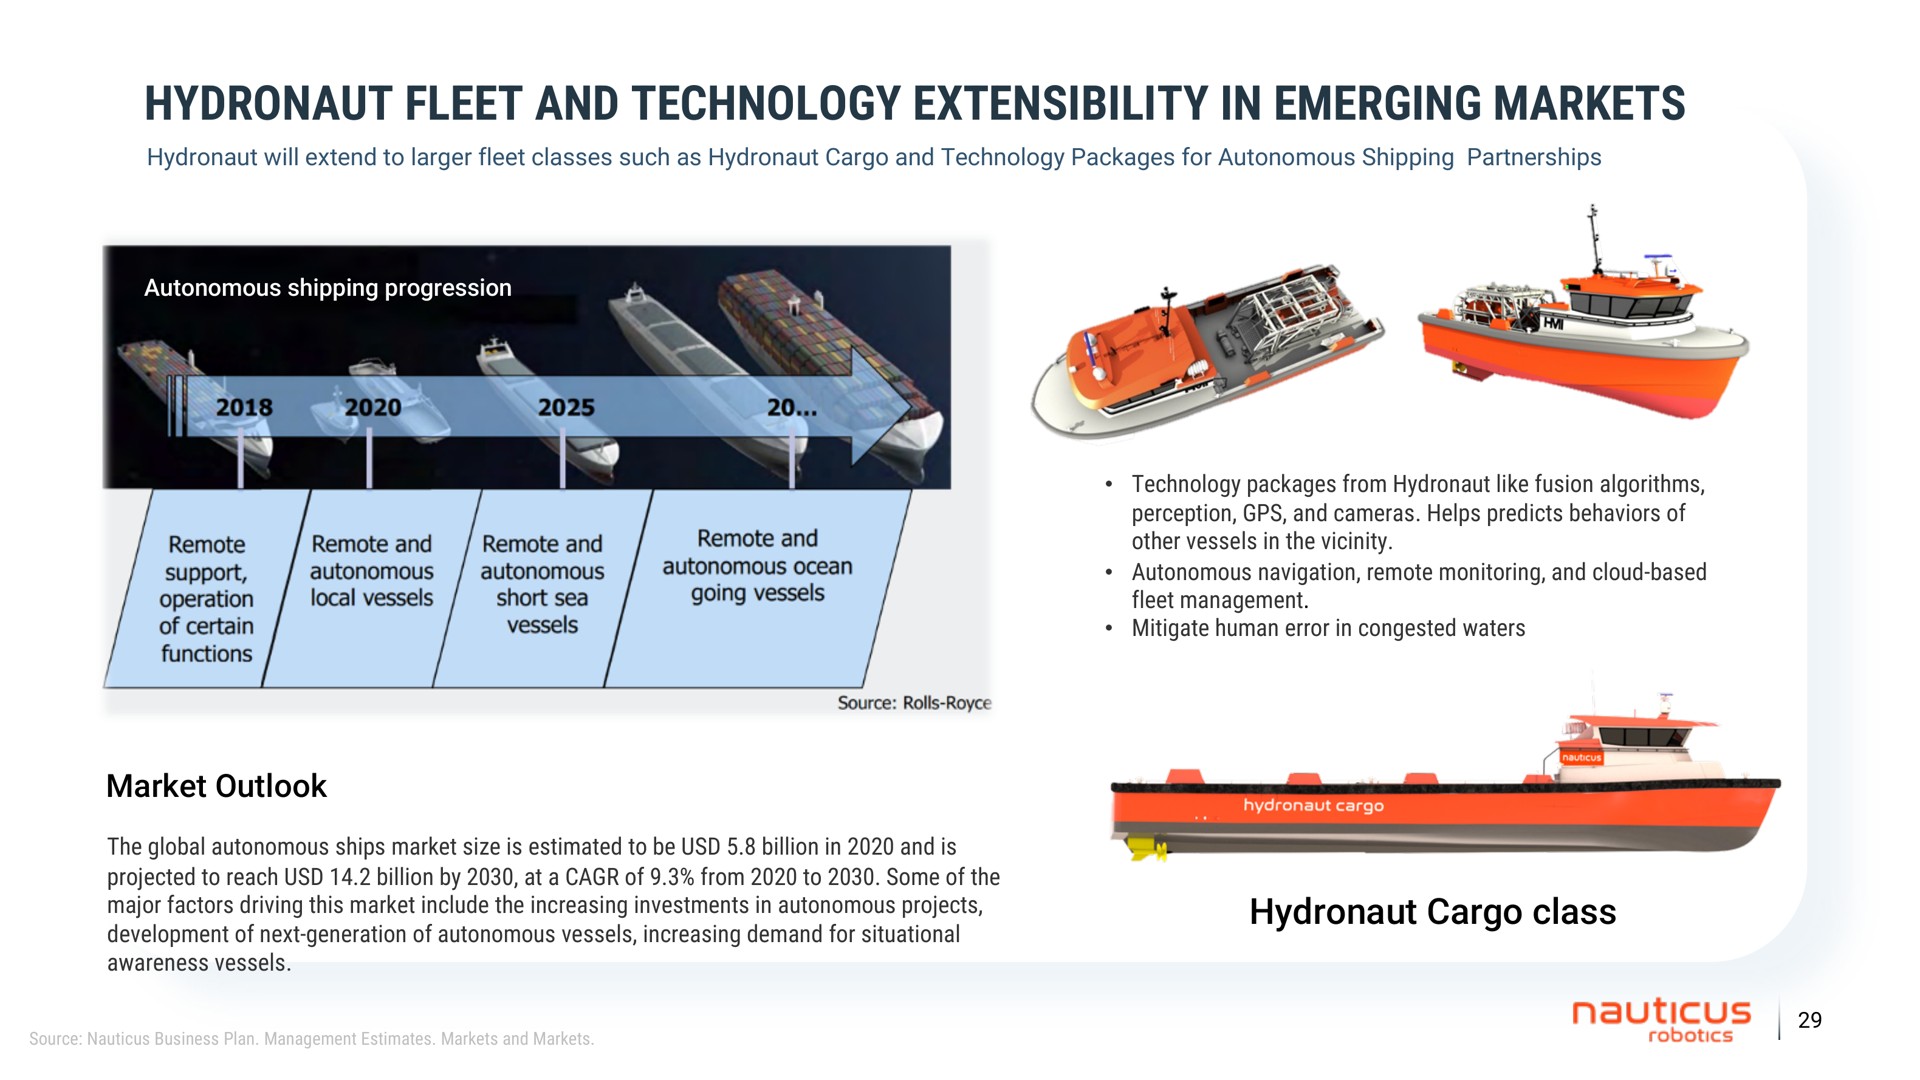 fleet and technology extensibility in emerging markets market outlook cargo class | Nauticus